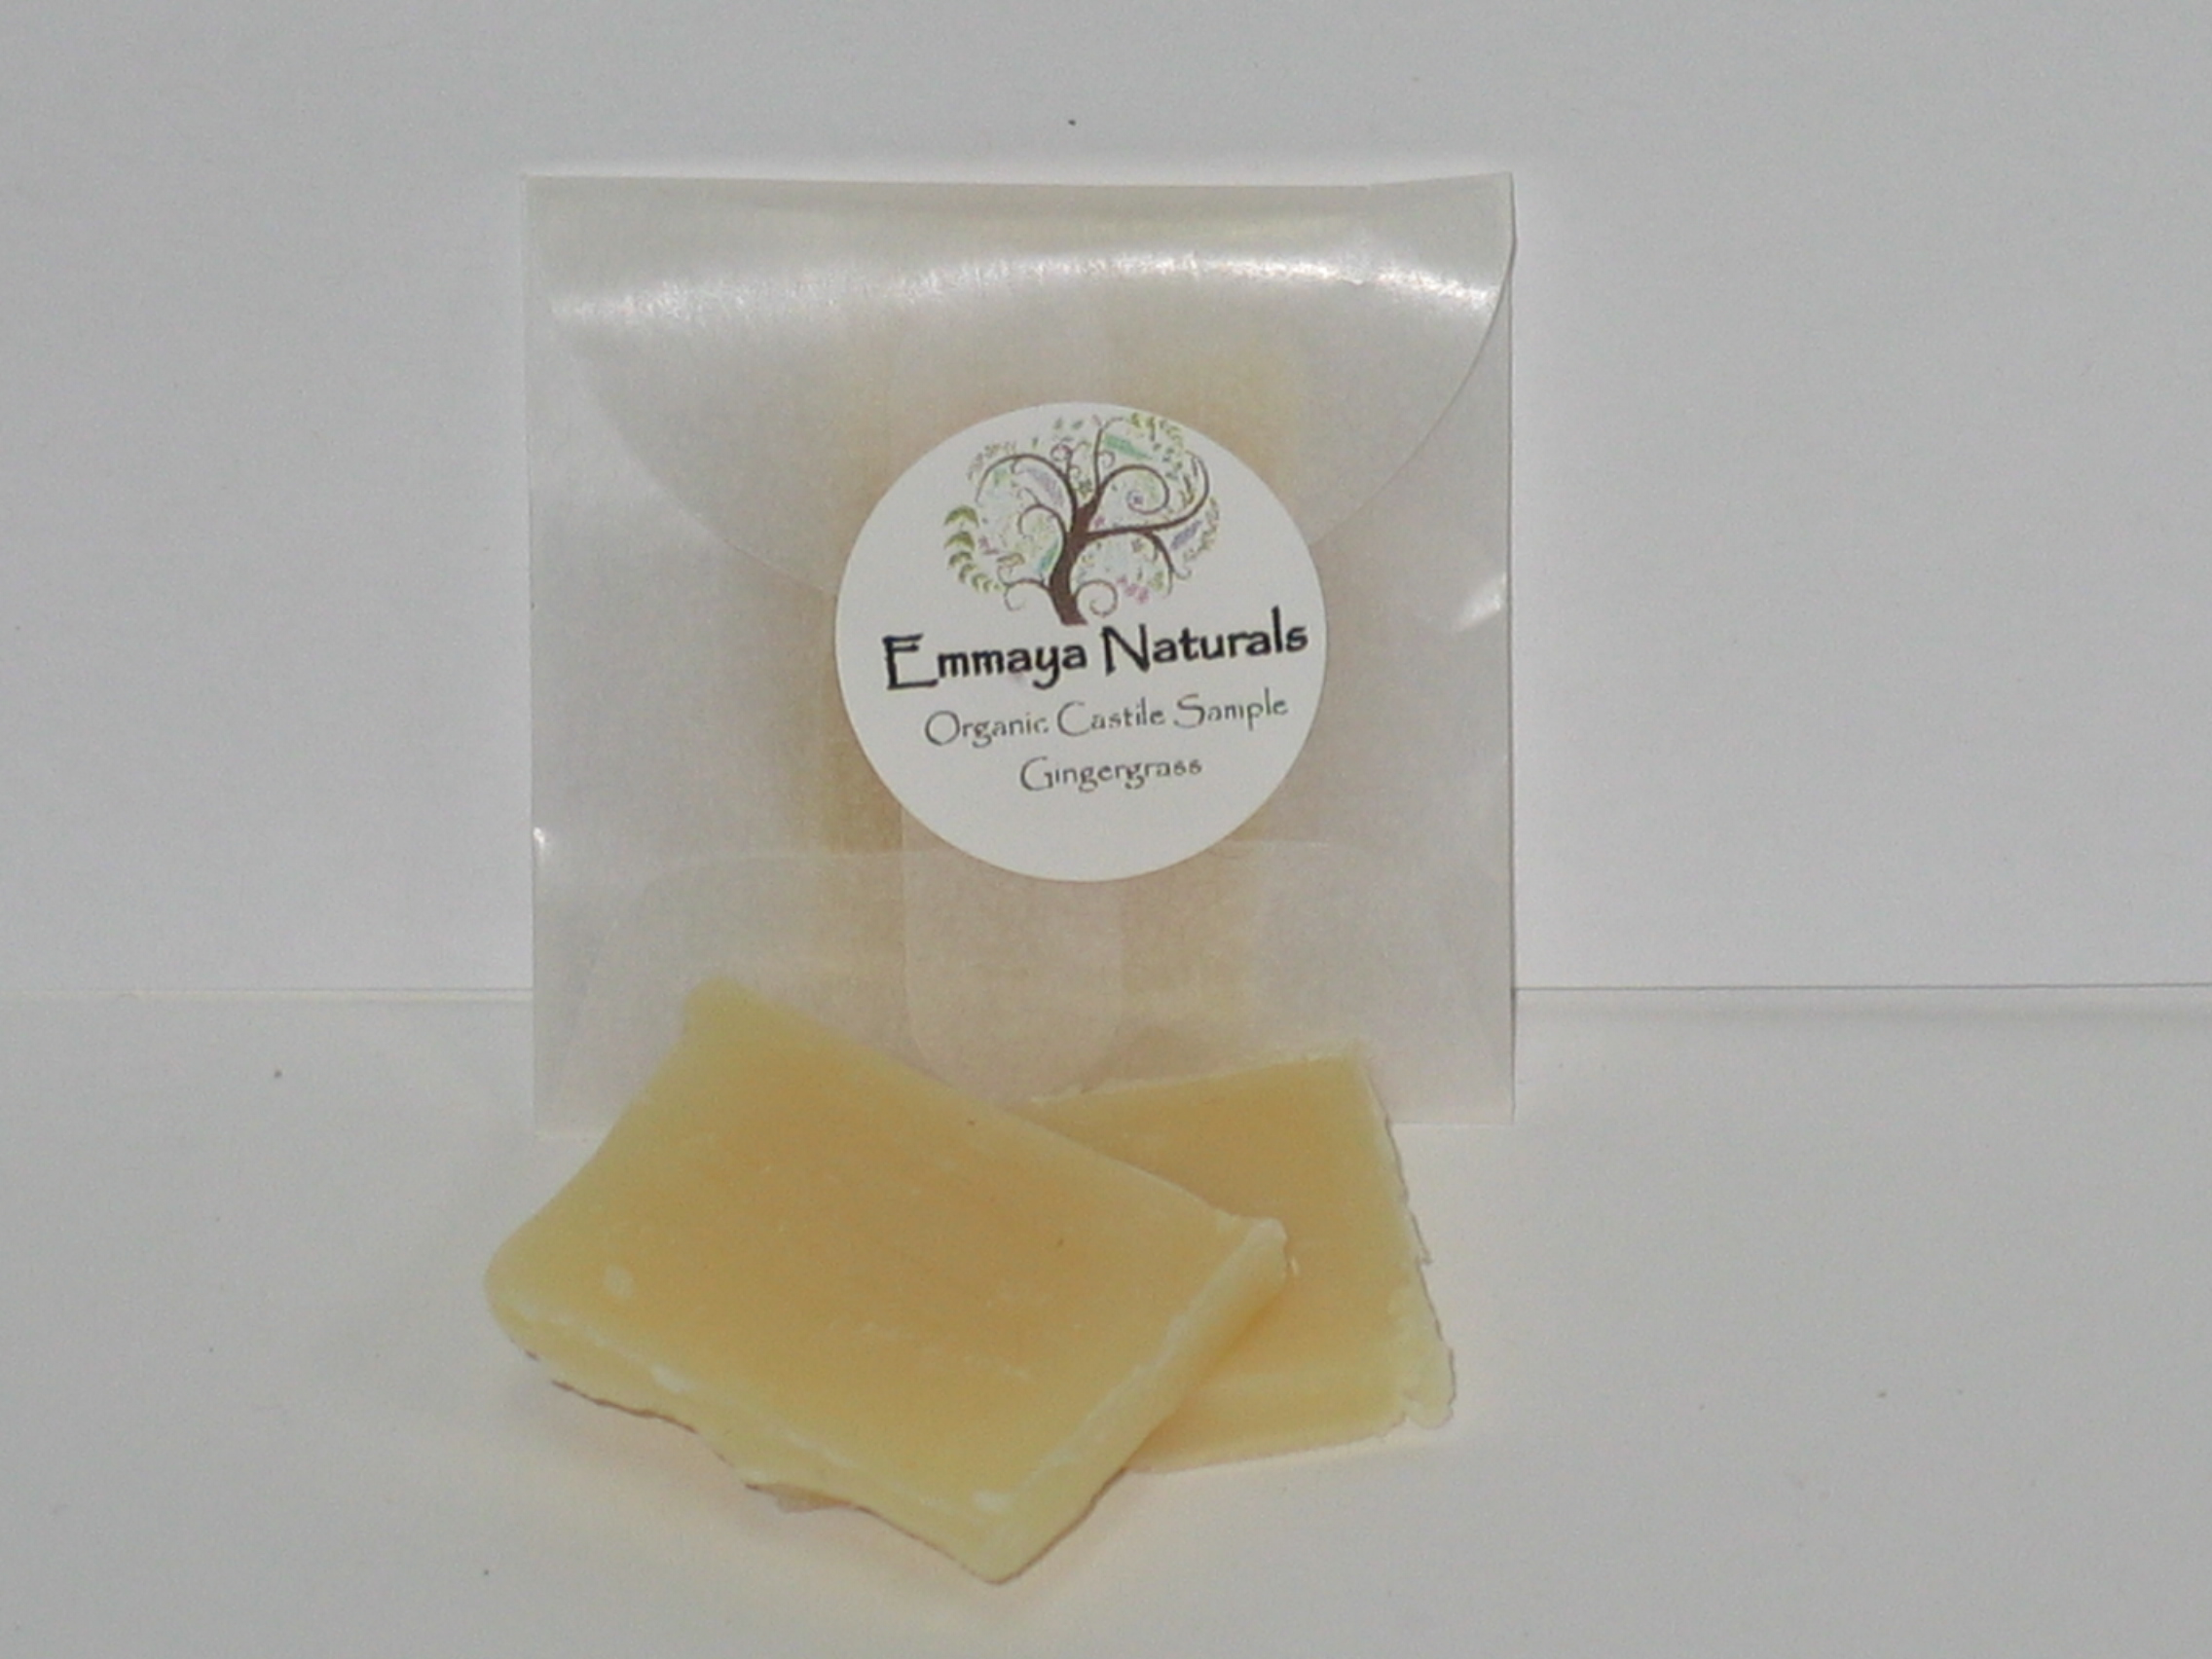 Emmaya Naturals Organic Castile Soap Sample